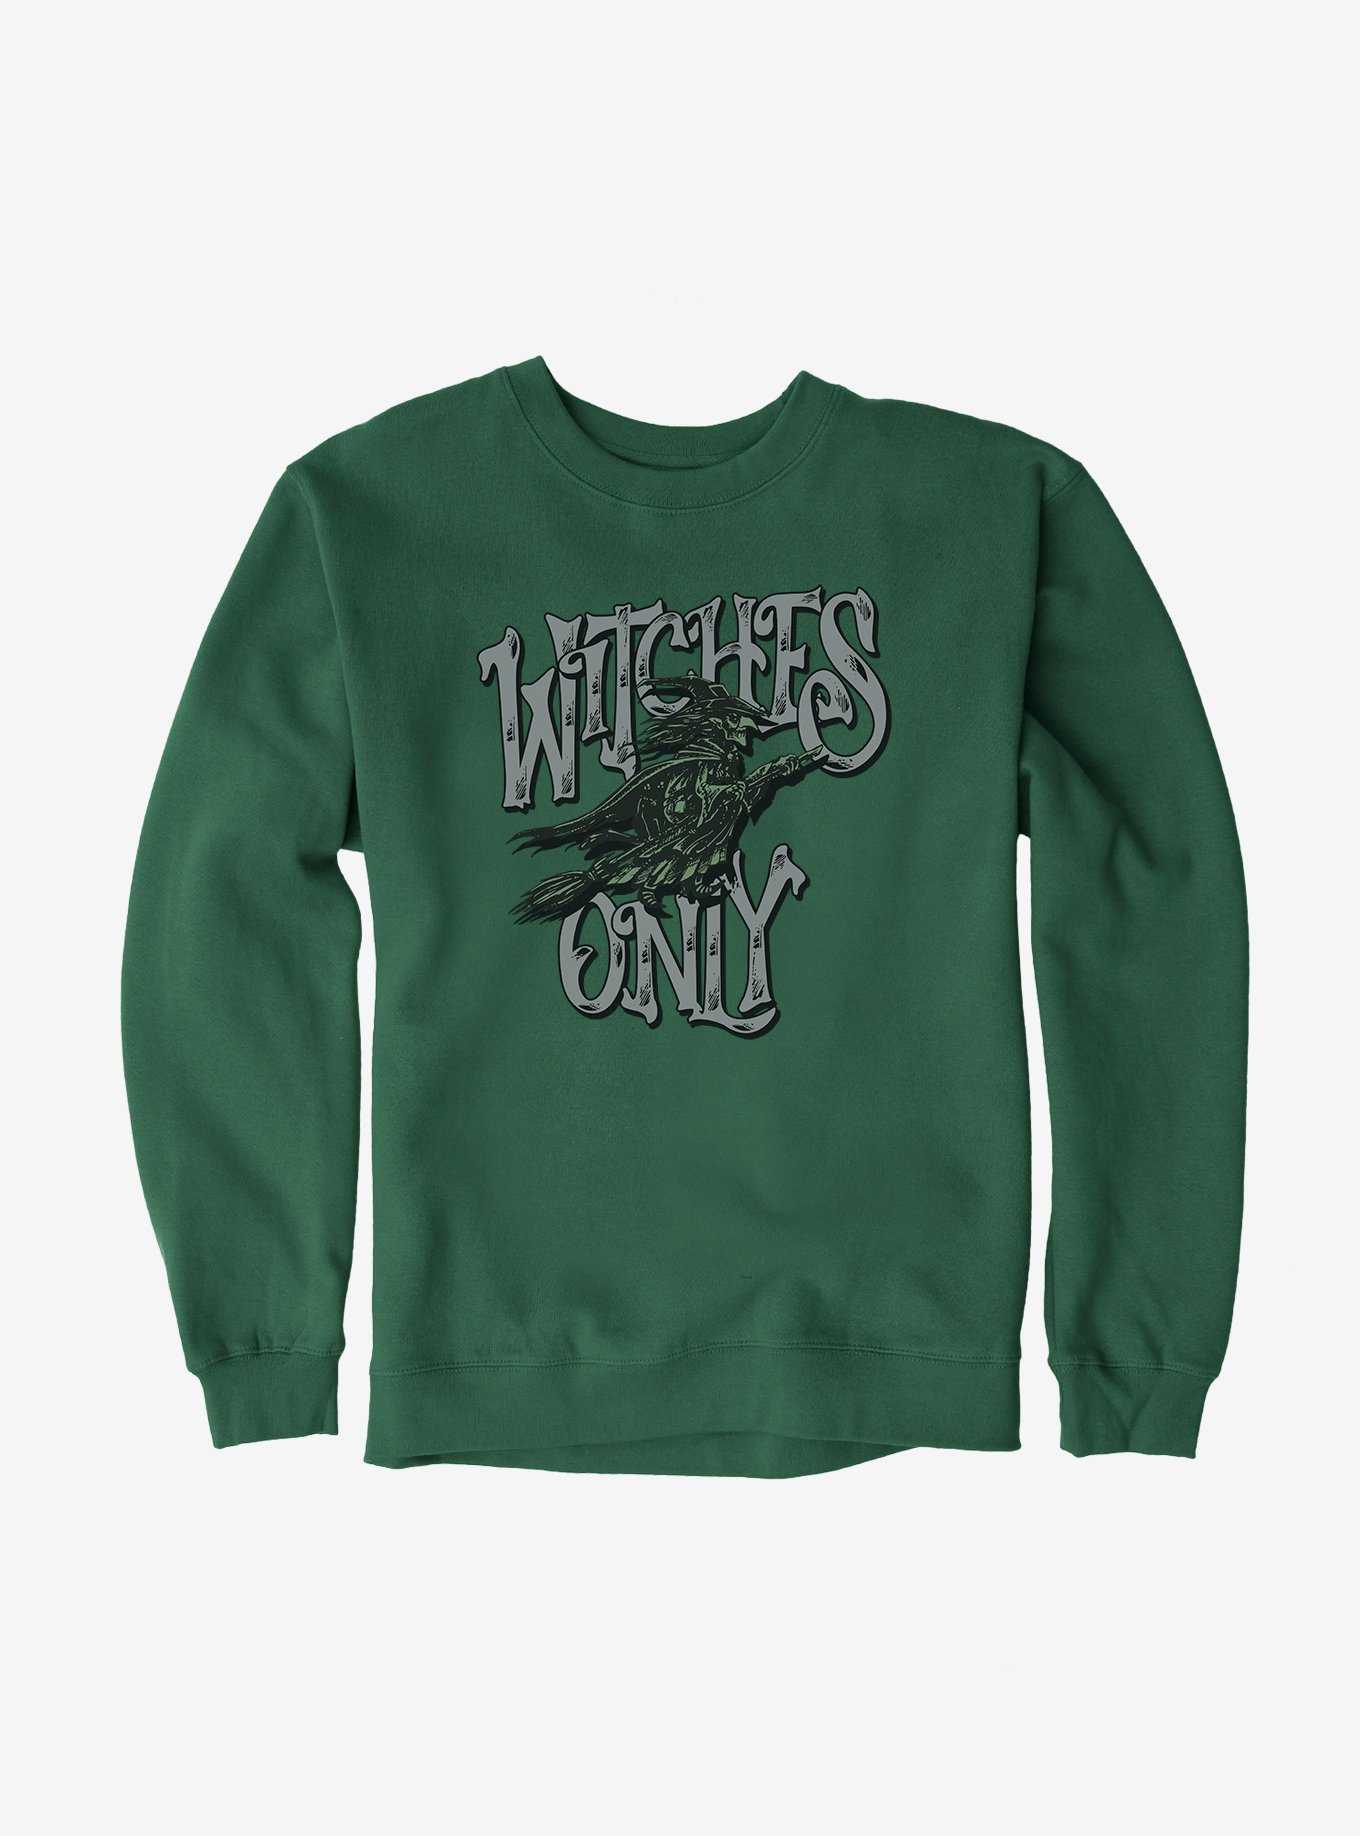 Withces Only Sweatshirt, , hi-res